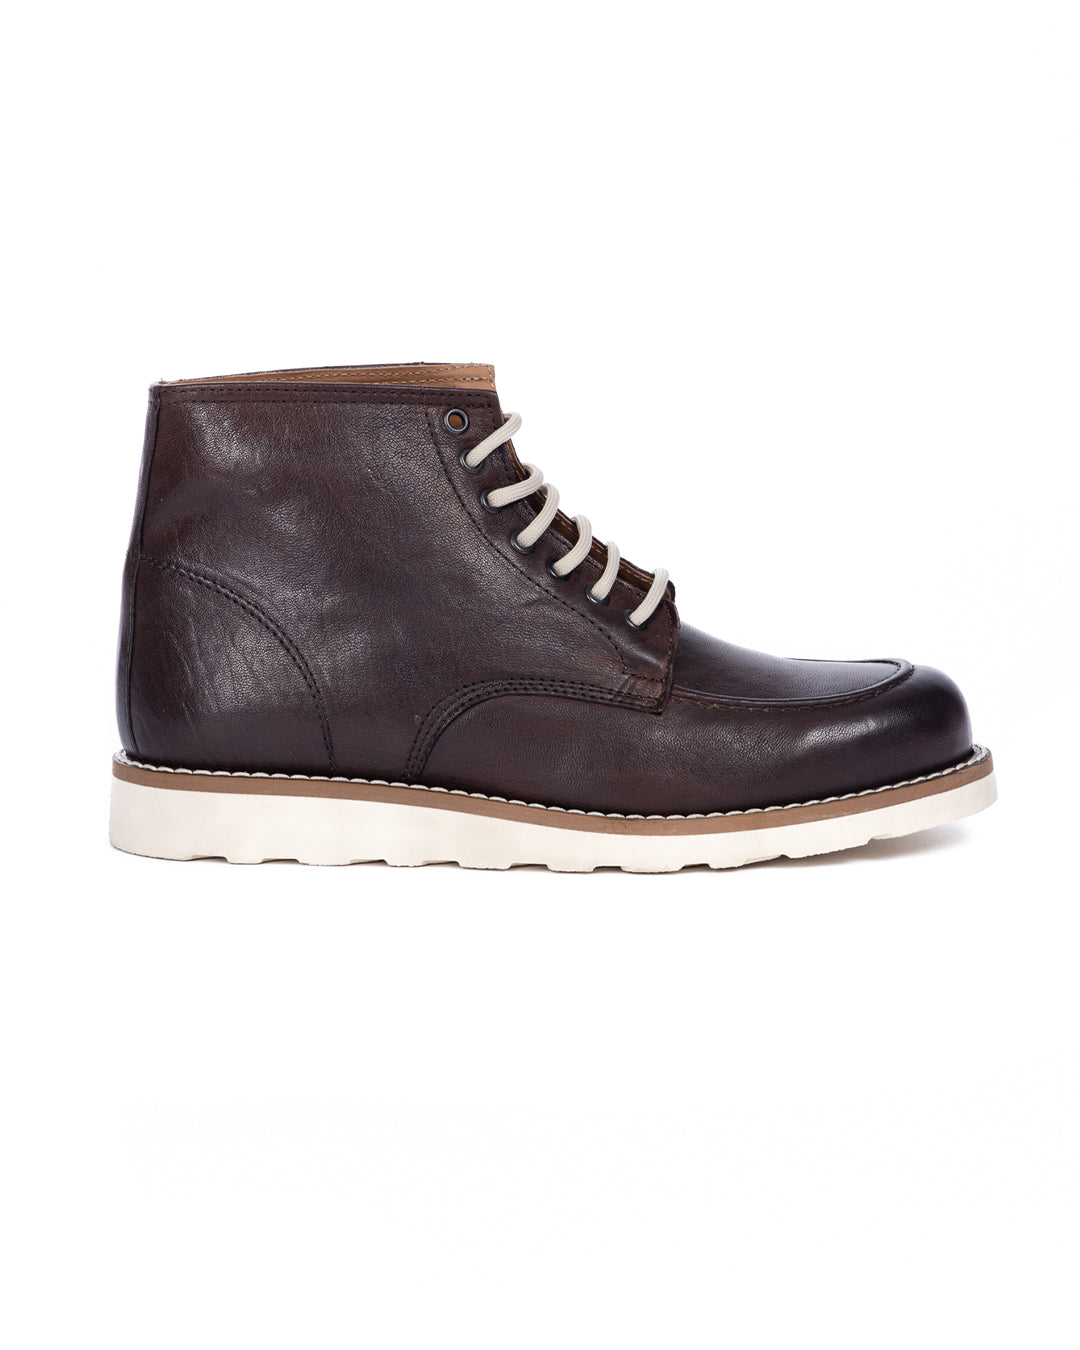 Moon - dark brown leather boot